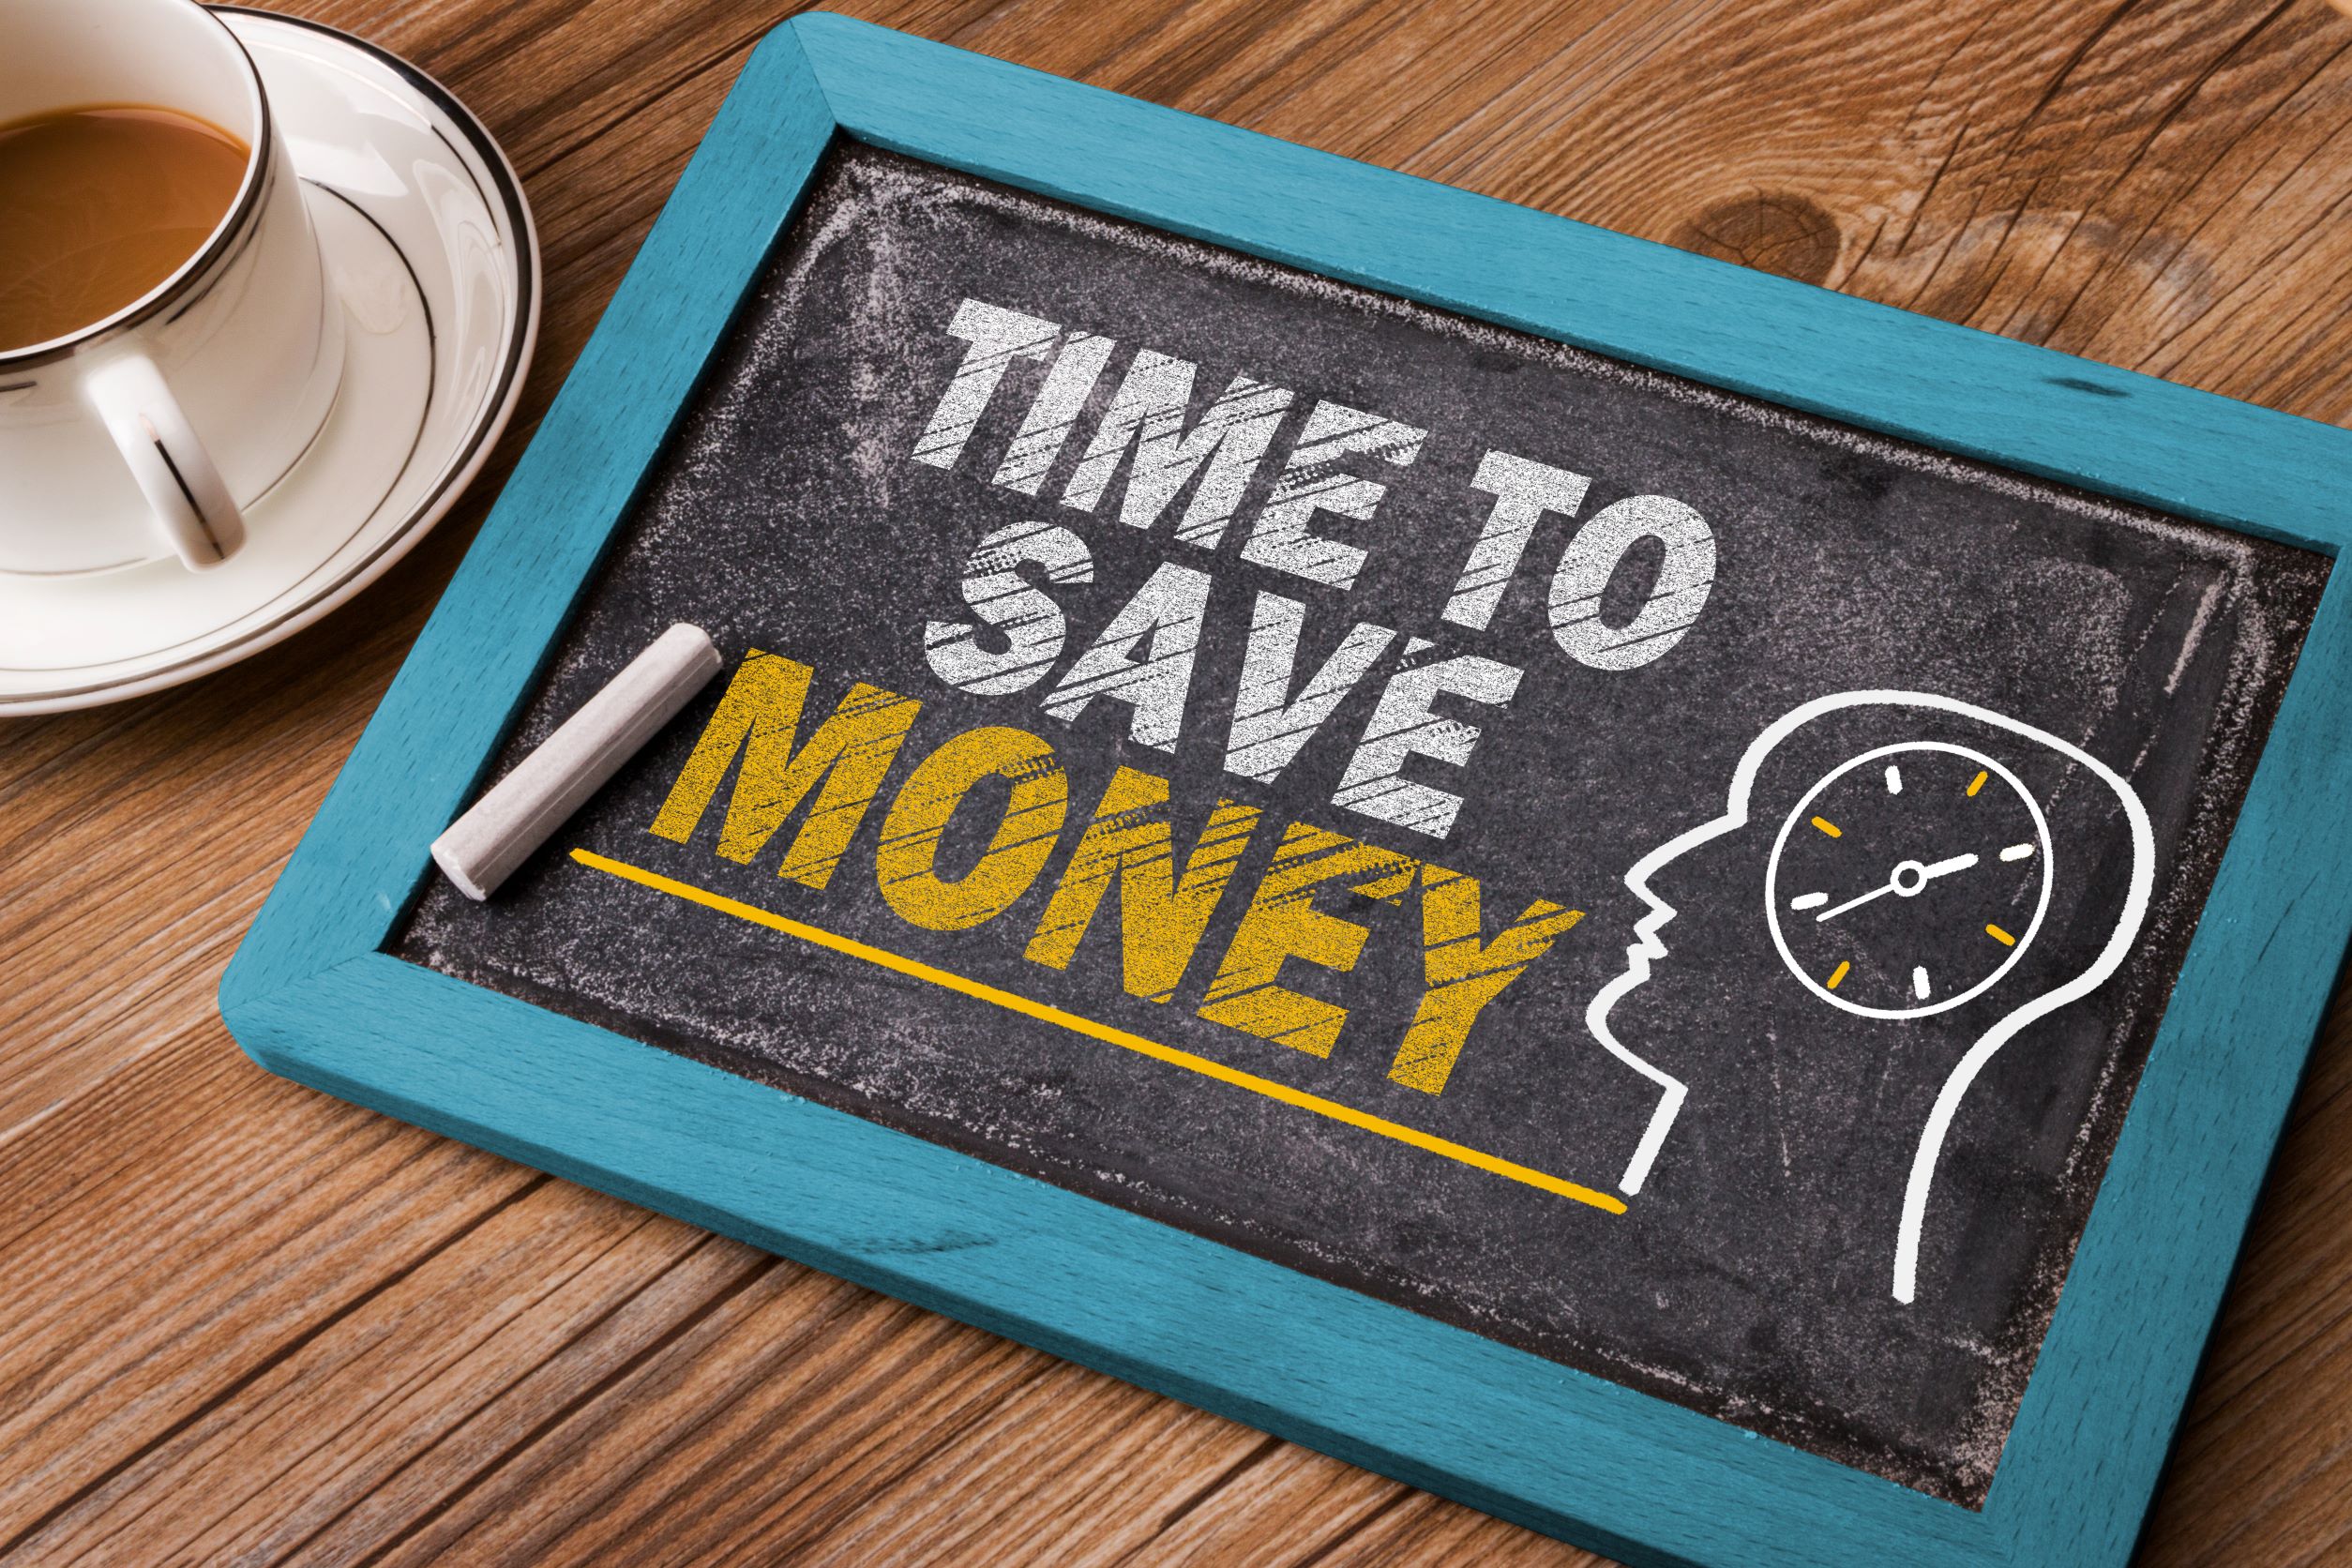 7 Ways to Save Money